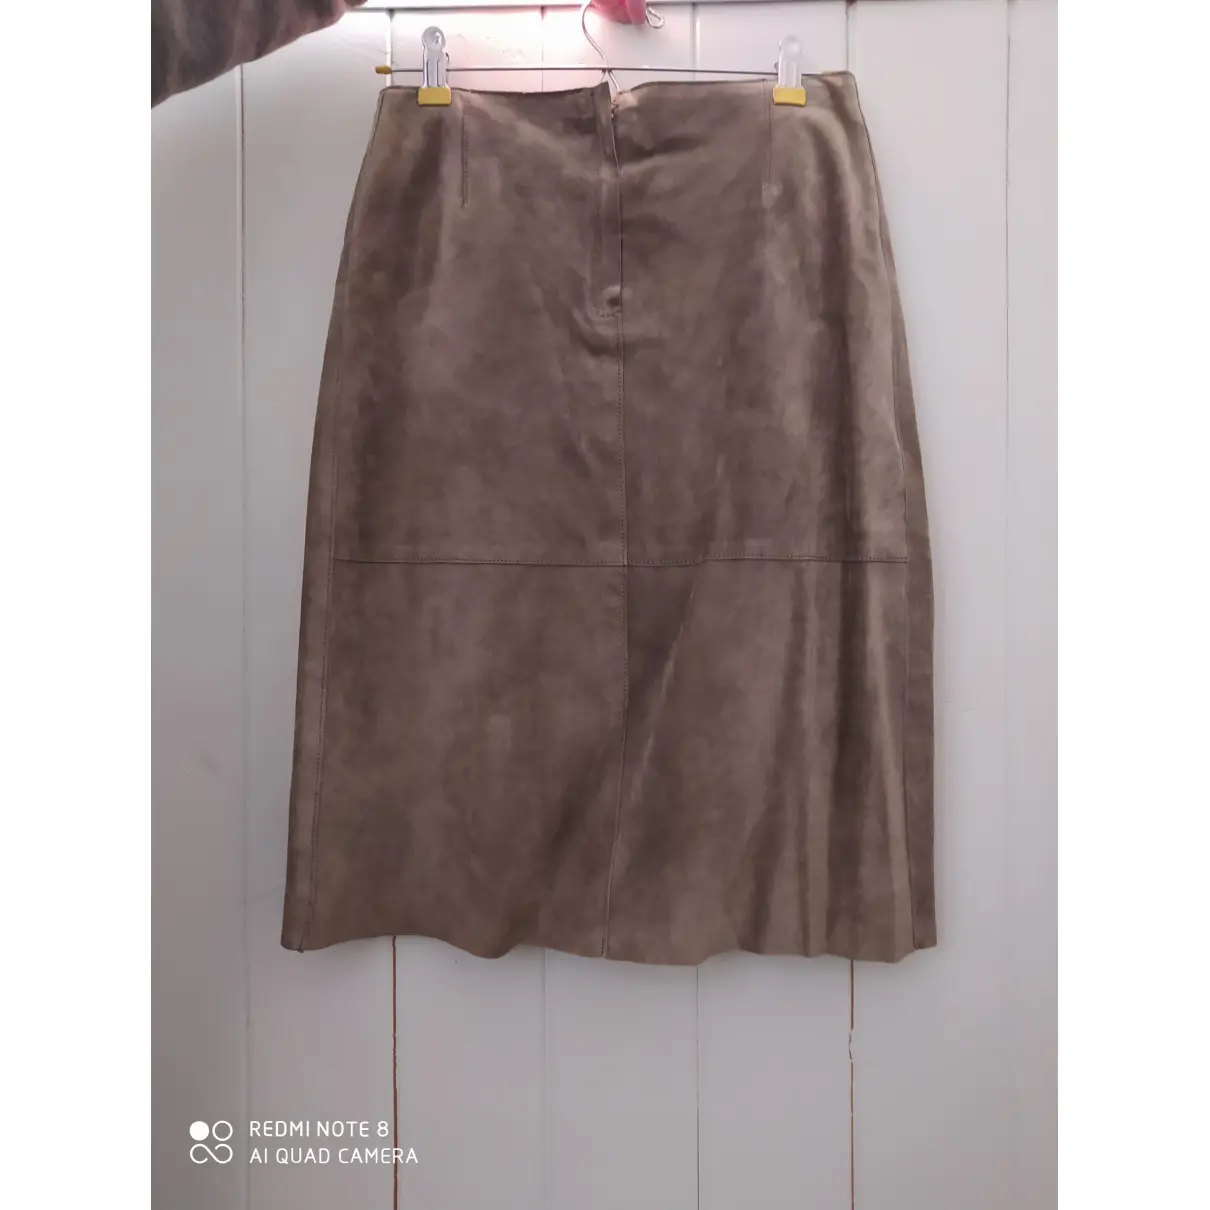 Buy Tory Burch Mid-length skirt online